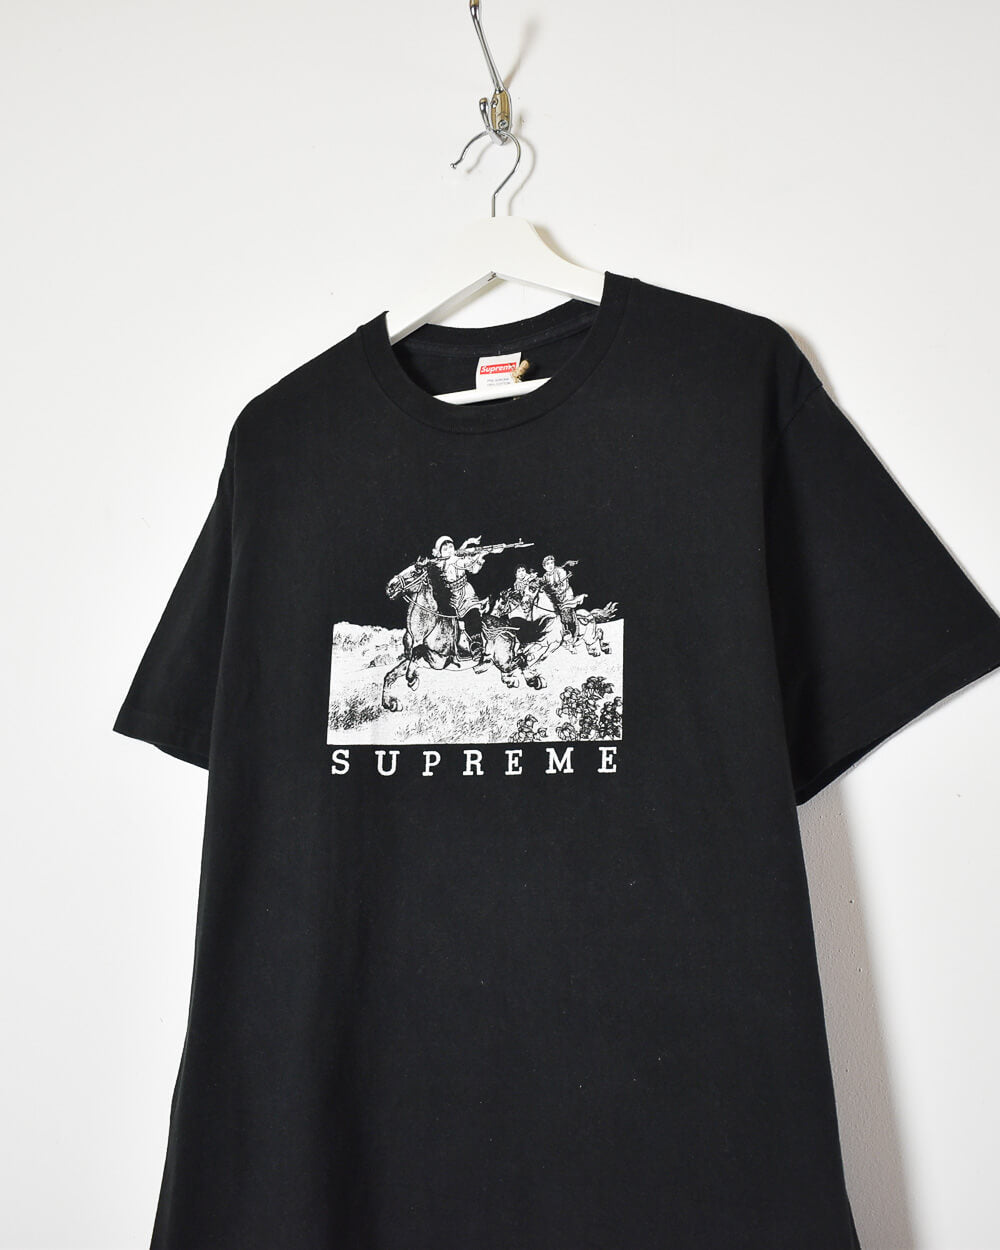 Black Supreme 'Riders' T-Shirt - Medium